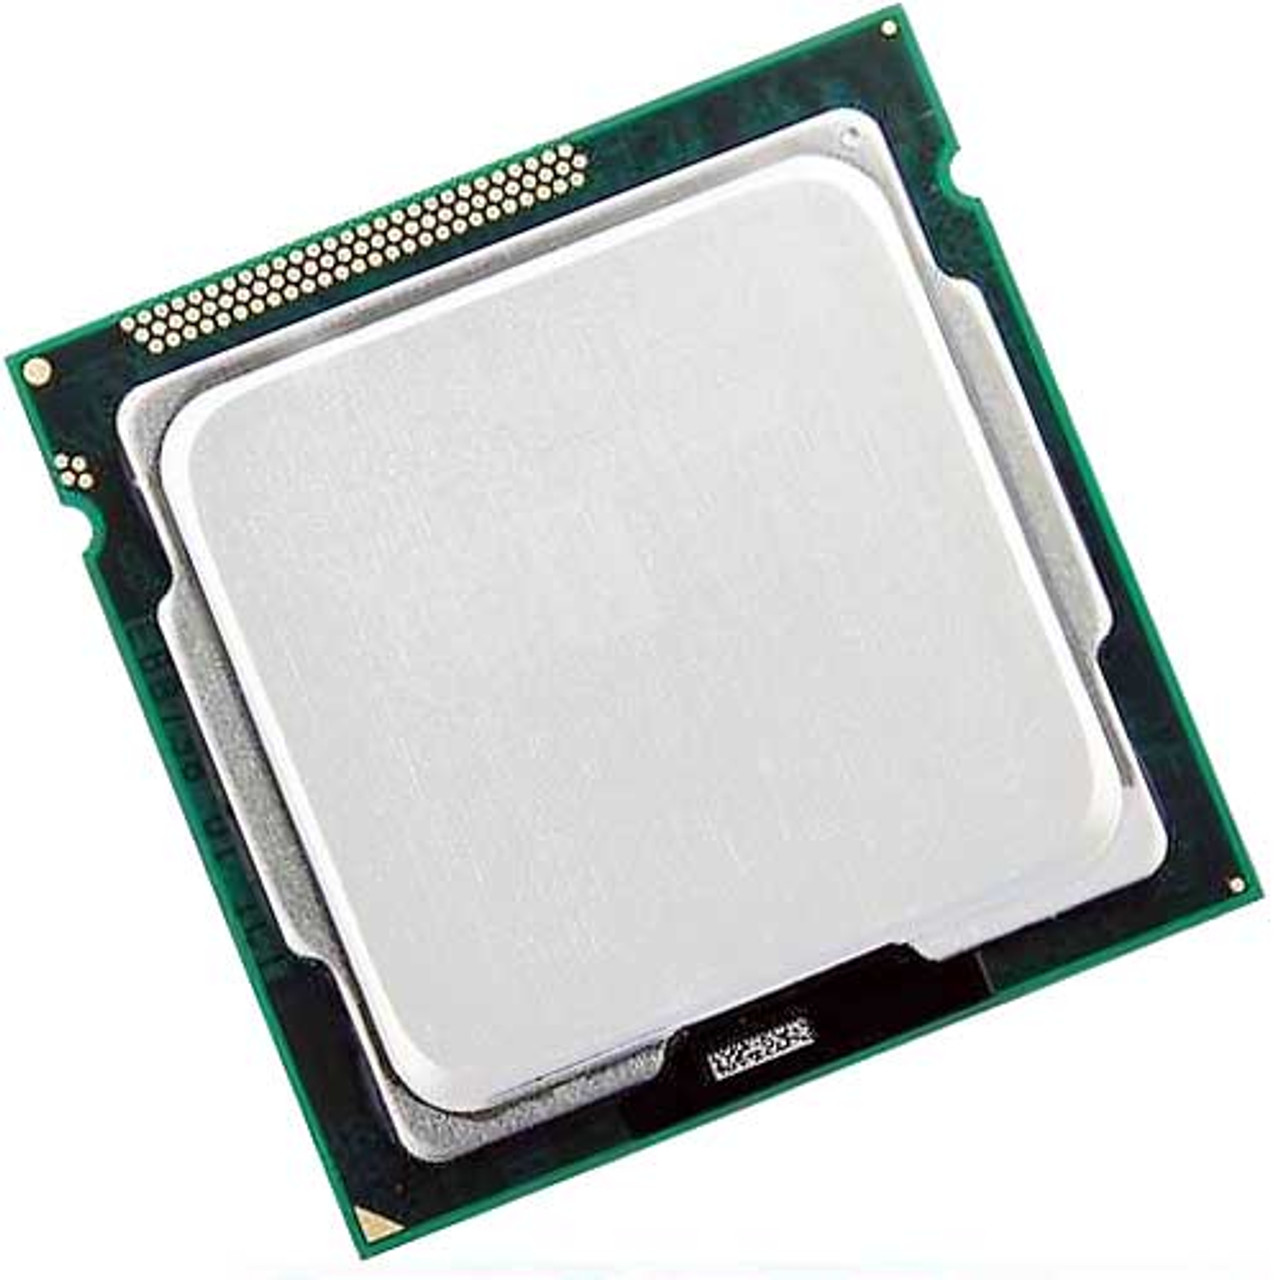 Intel Xeon UP Quad-core X3430 2.40GHz Processor BV80605001914AG UPC 675901017343 - INTEL